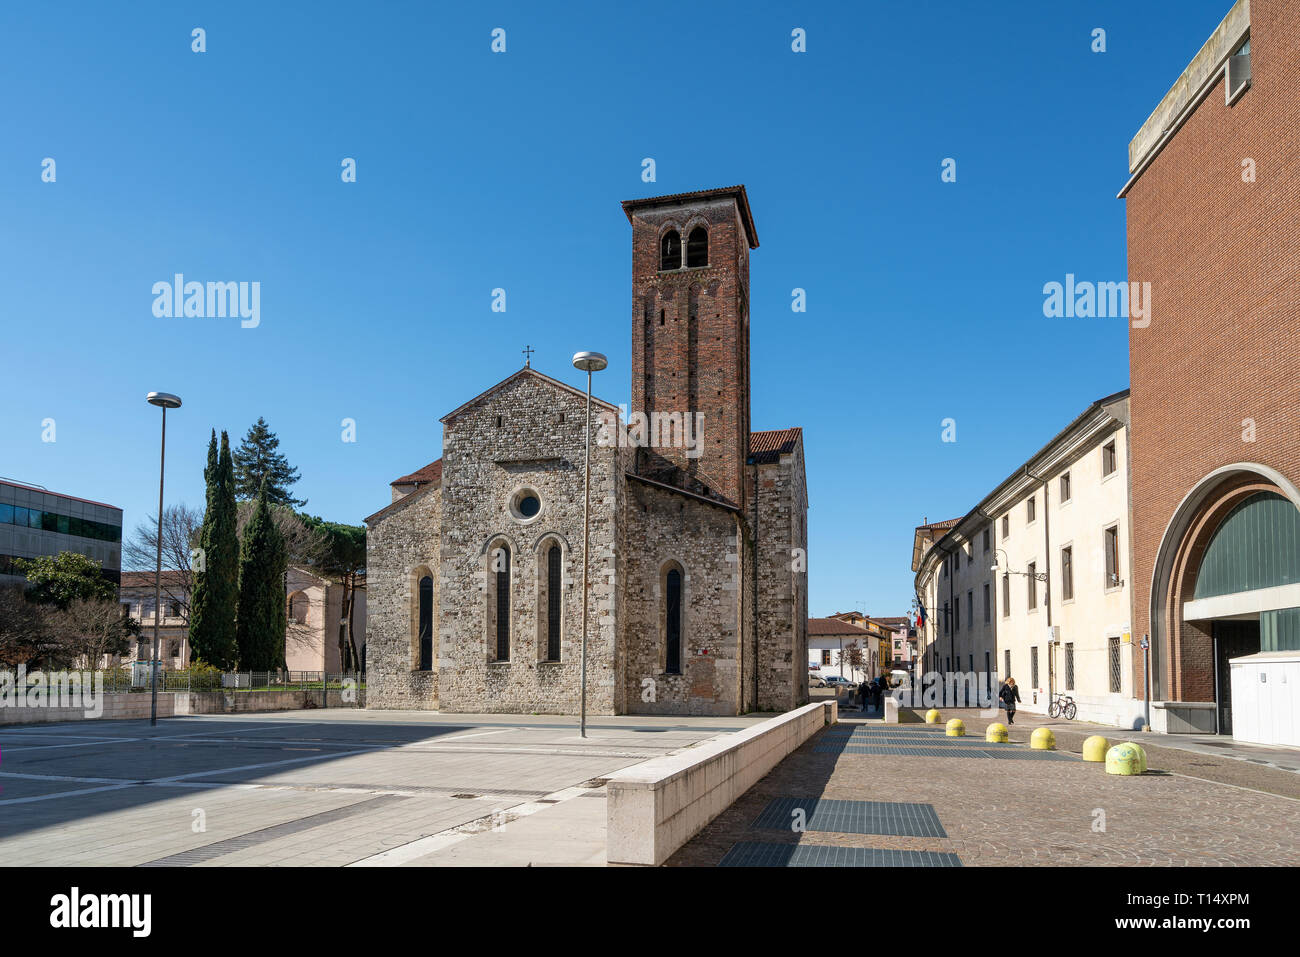 Udine, Friuli Venezia Giulia region, Italy. March 22 2019.   The church of San Francesco, one of the oldest religious buildings in Udine, now desecrat Stock Photo